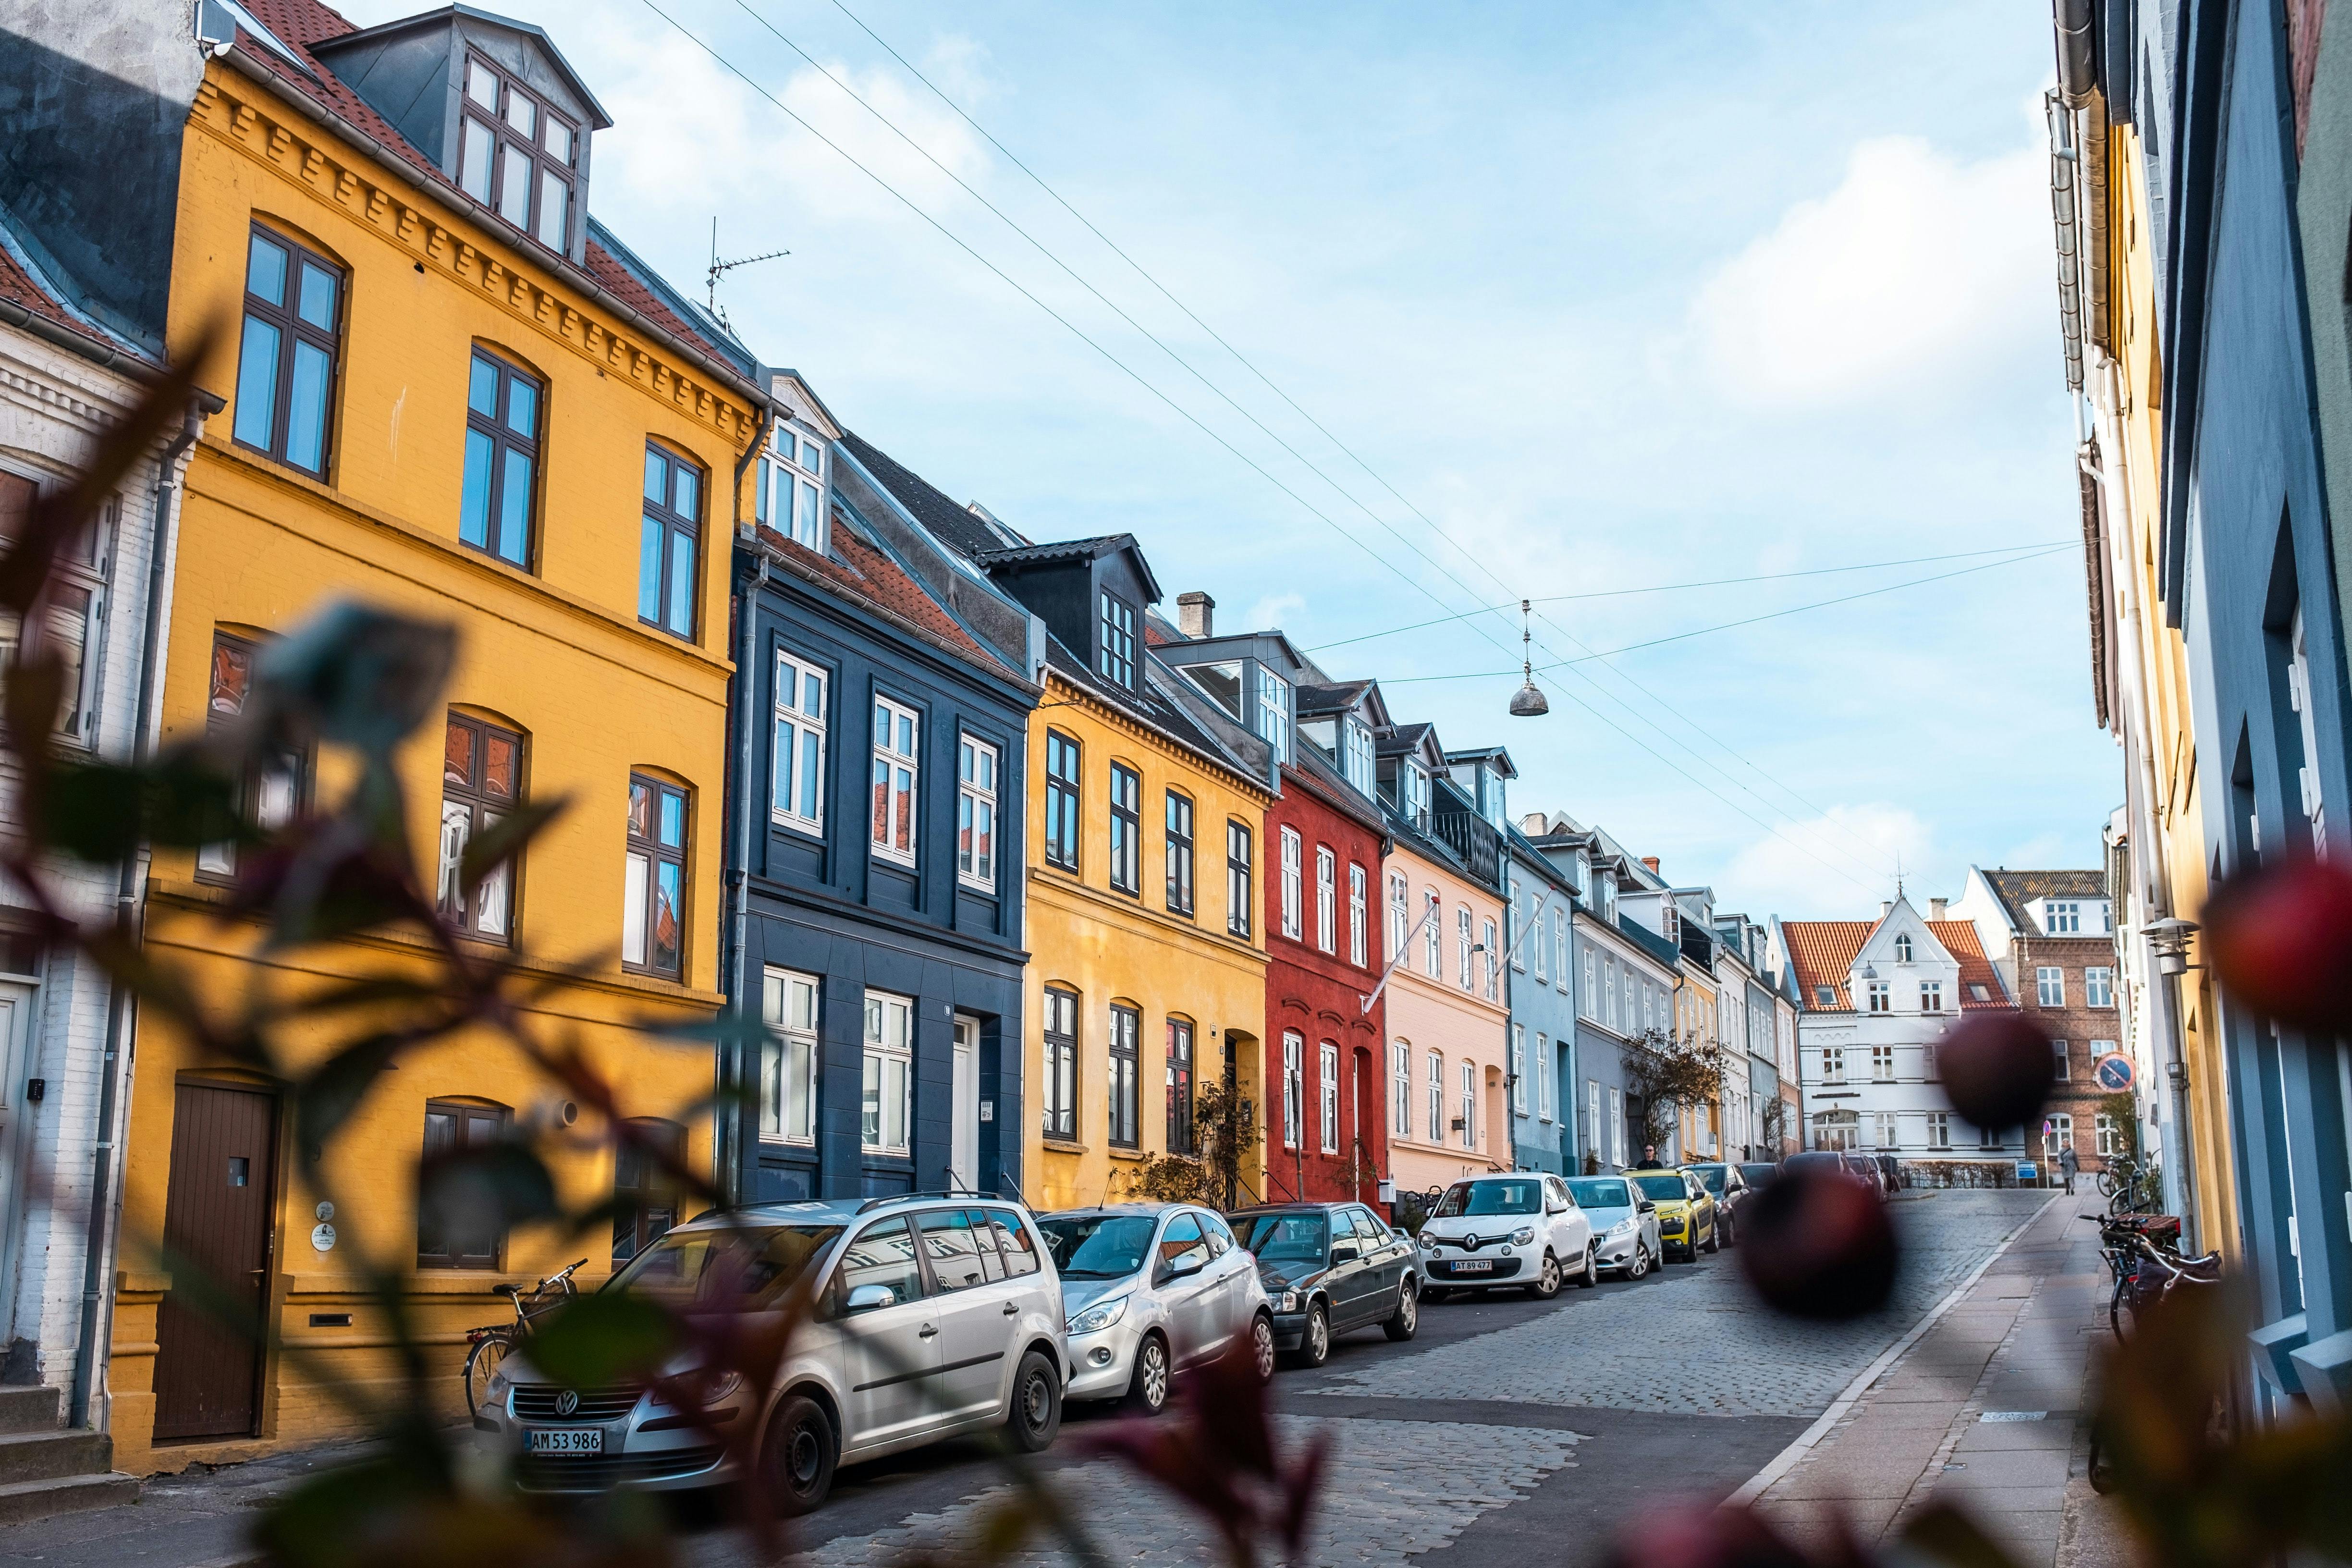 Rundvisning til de mest instagramvenlige steder i Aarhus med en lokal